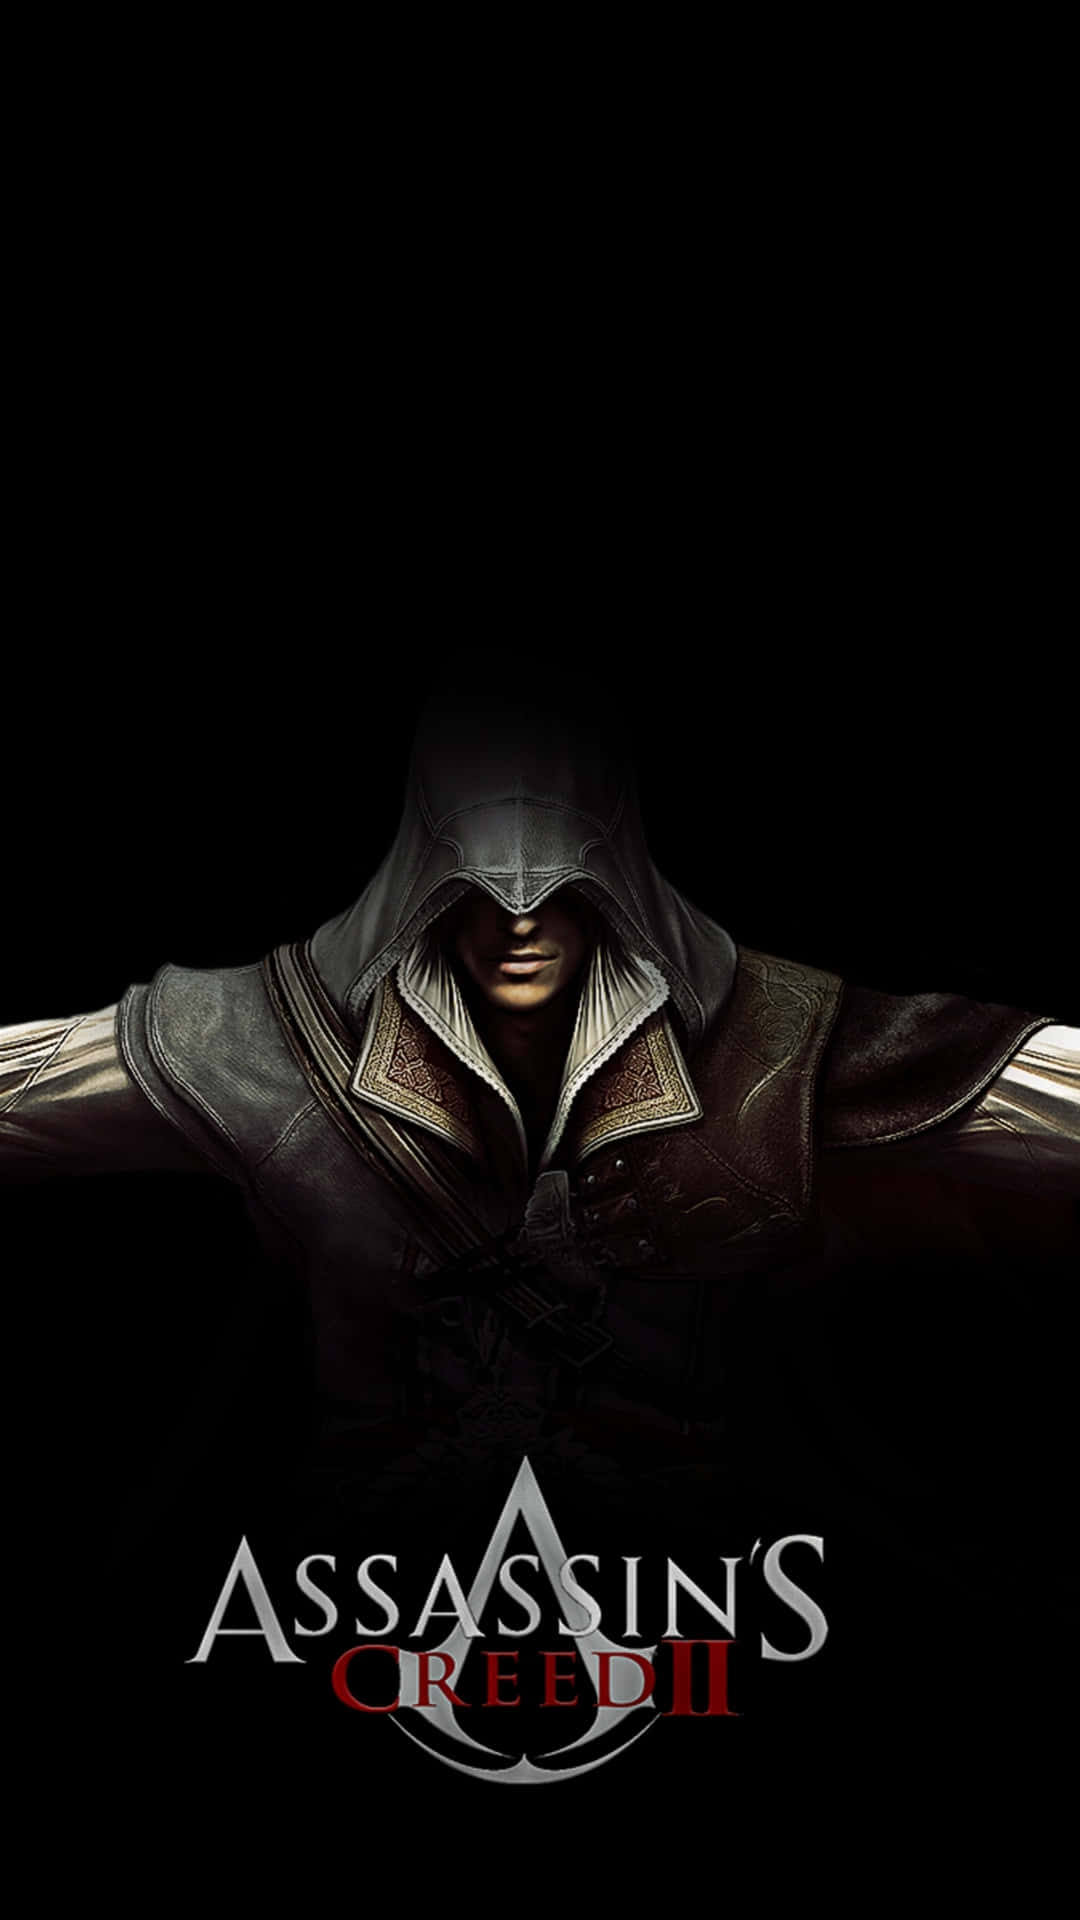 Assassin's Creed Iii Wallpaper